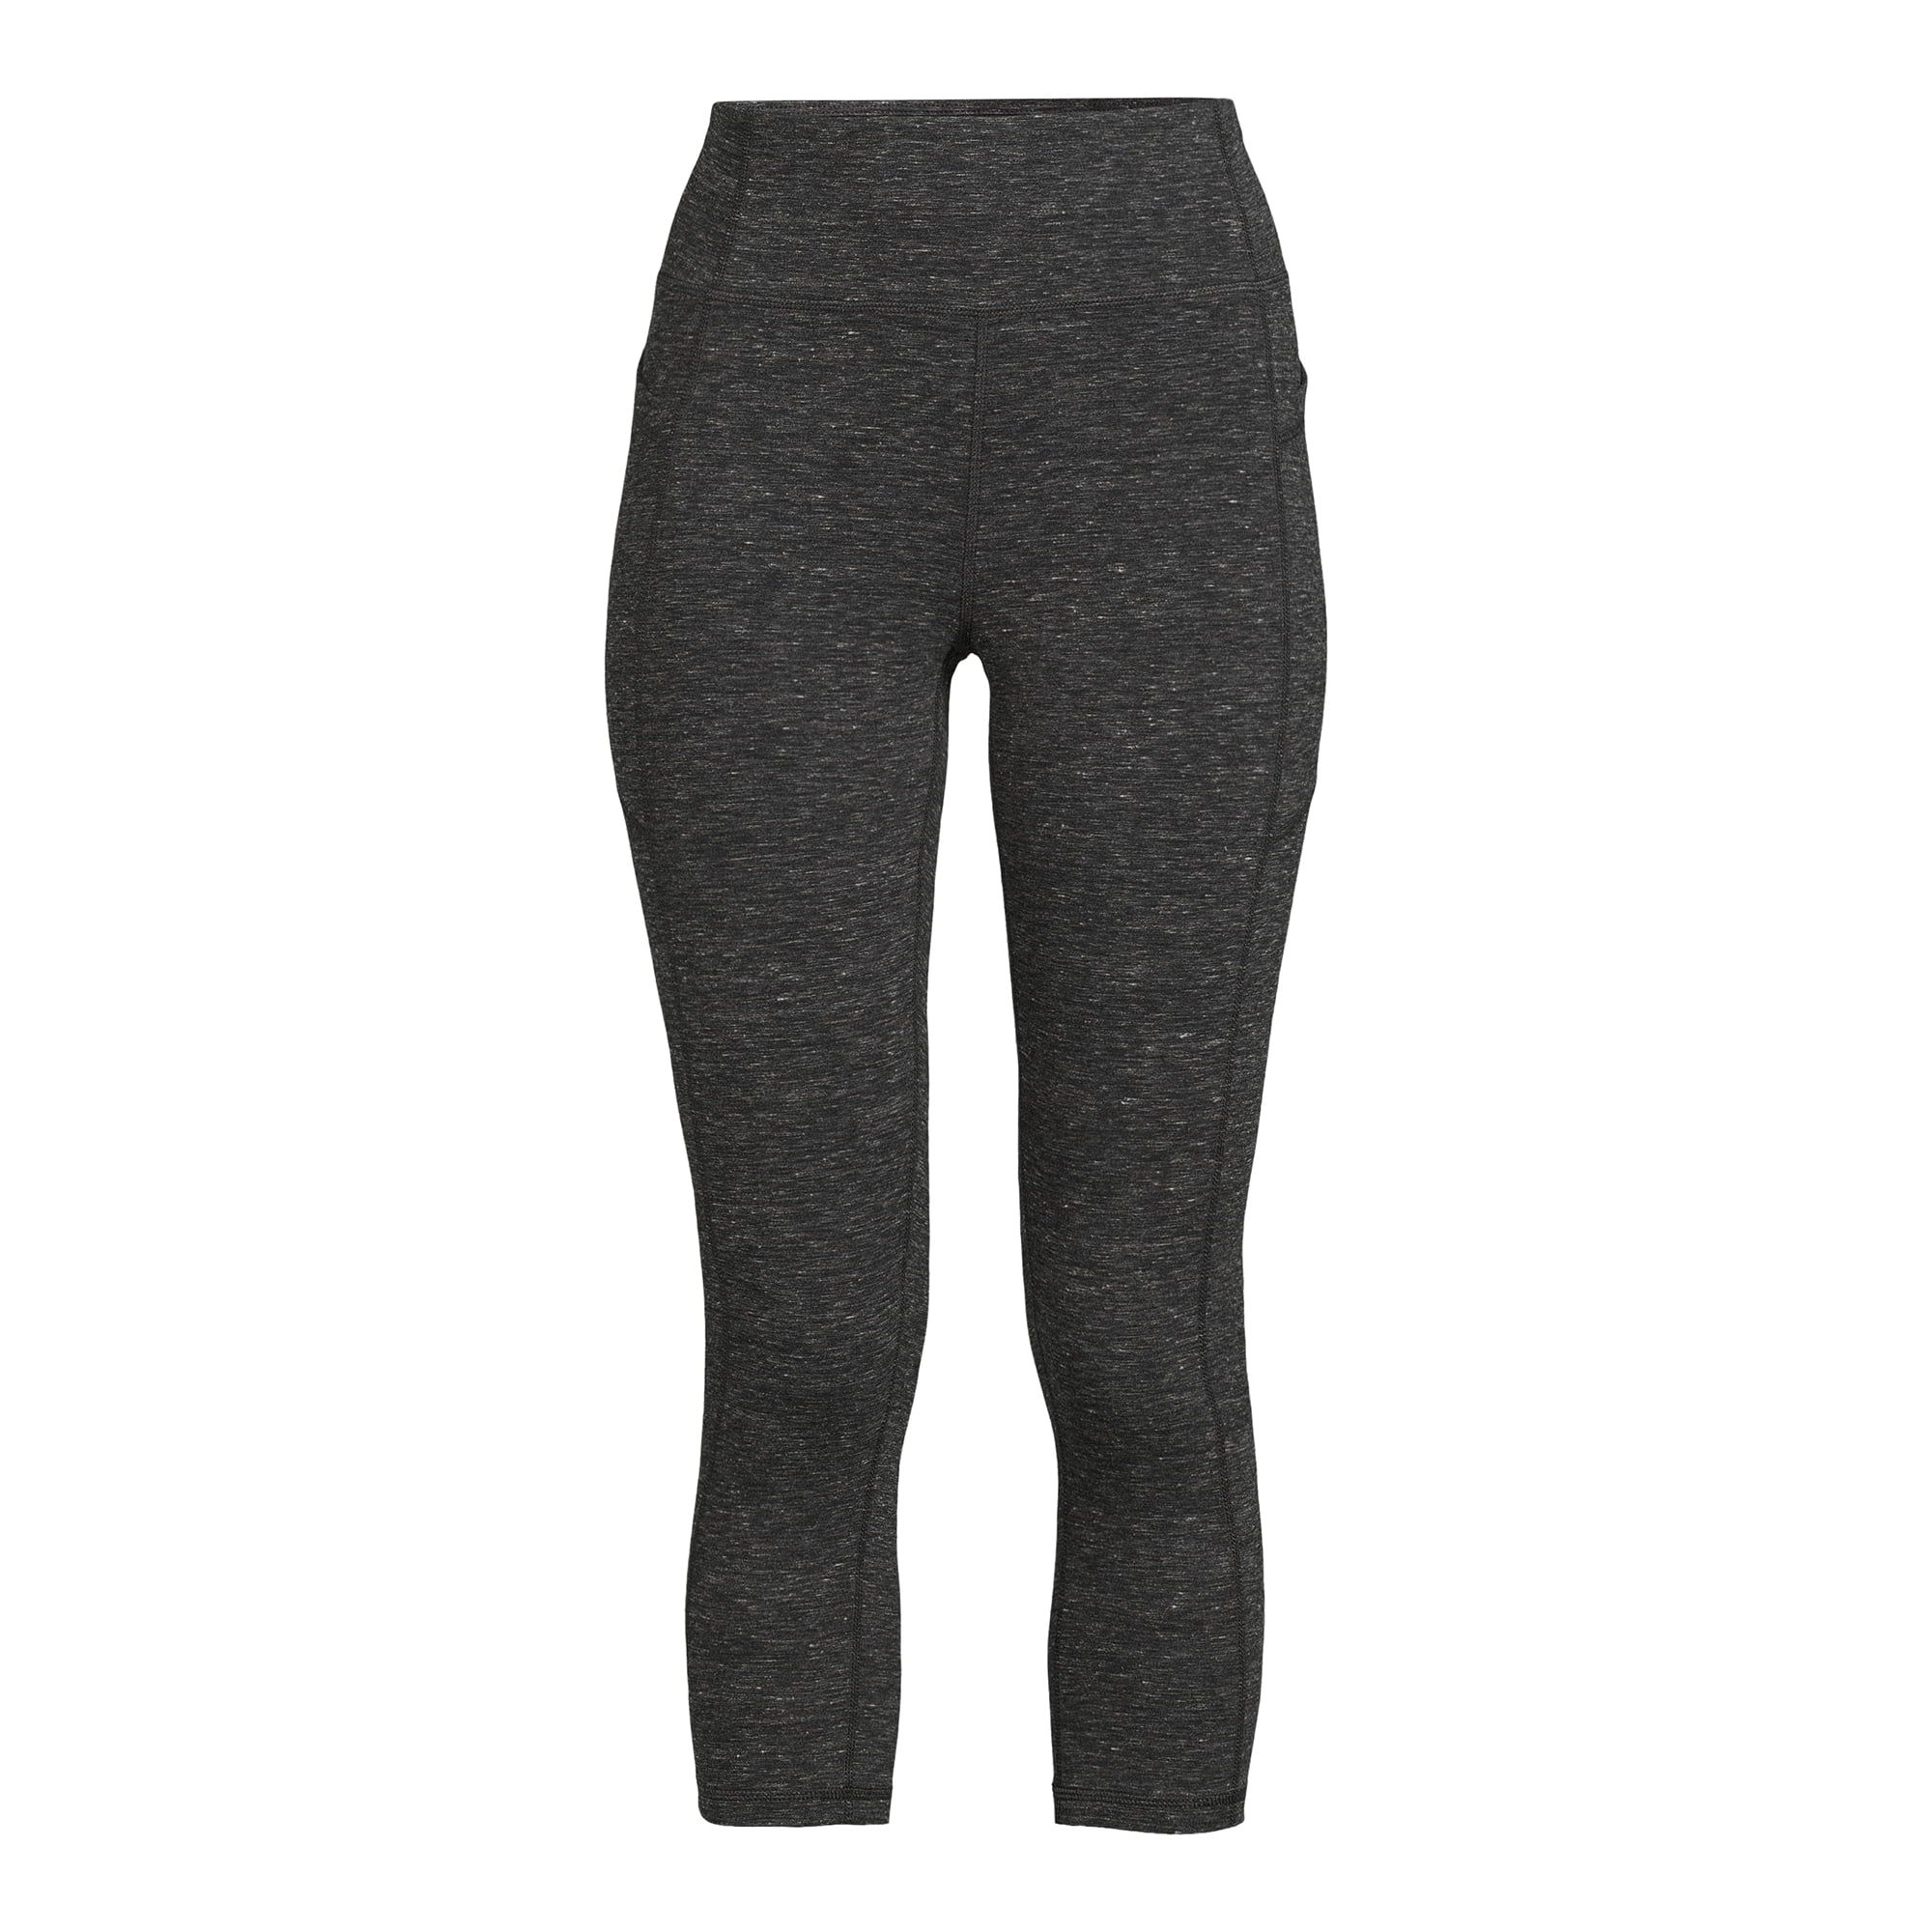 Avia Women’s Stretch Cotton Blend Capri Leggings with Side Pockets | Walmart (US)